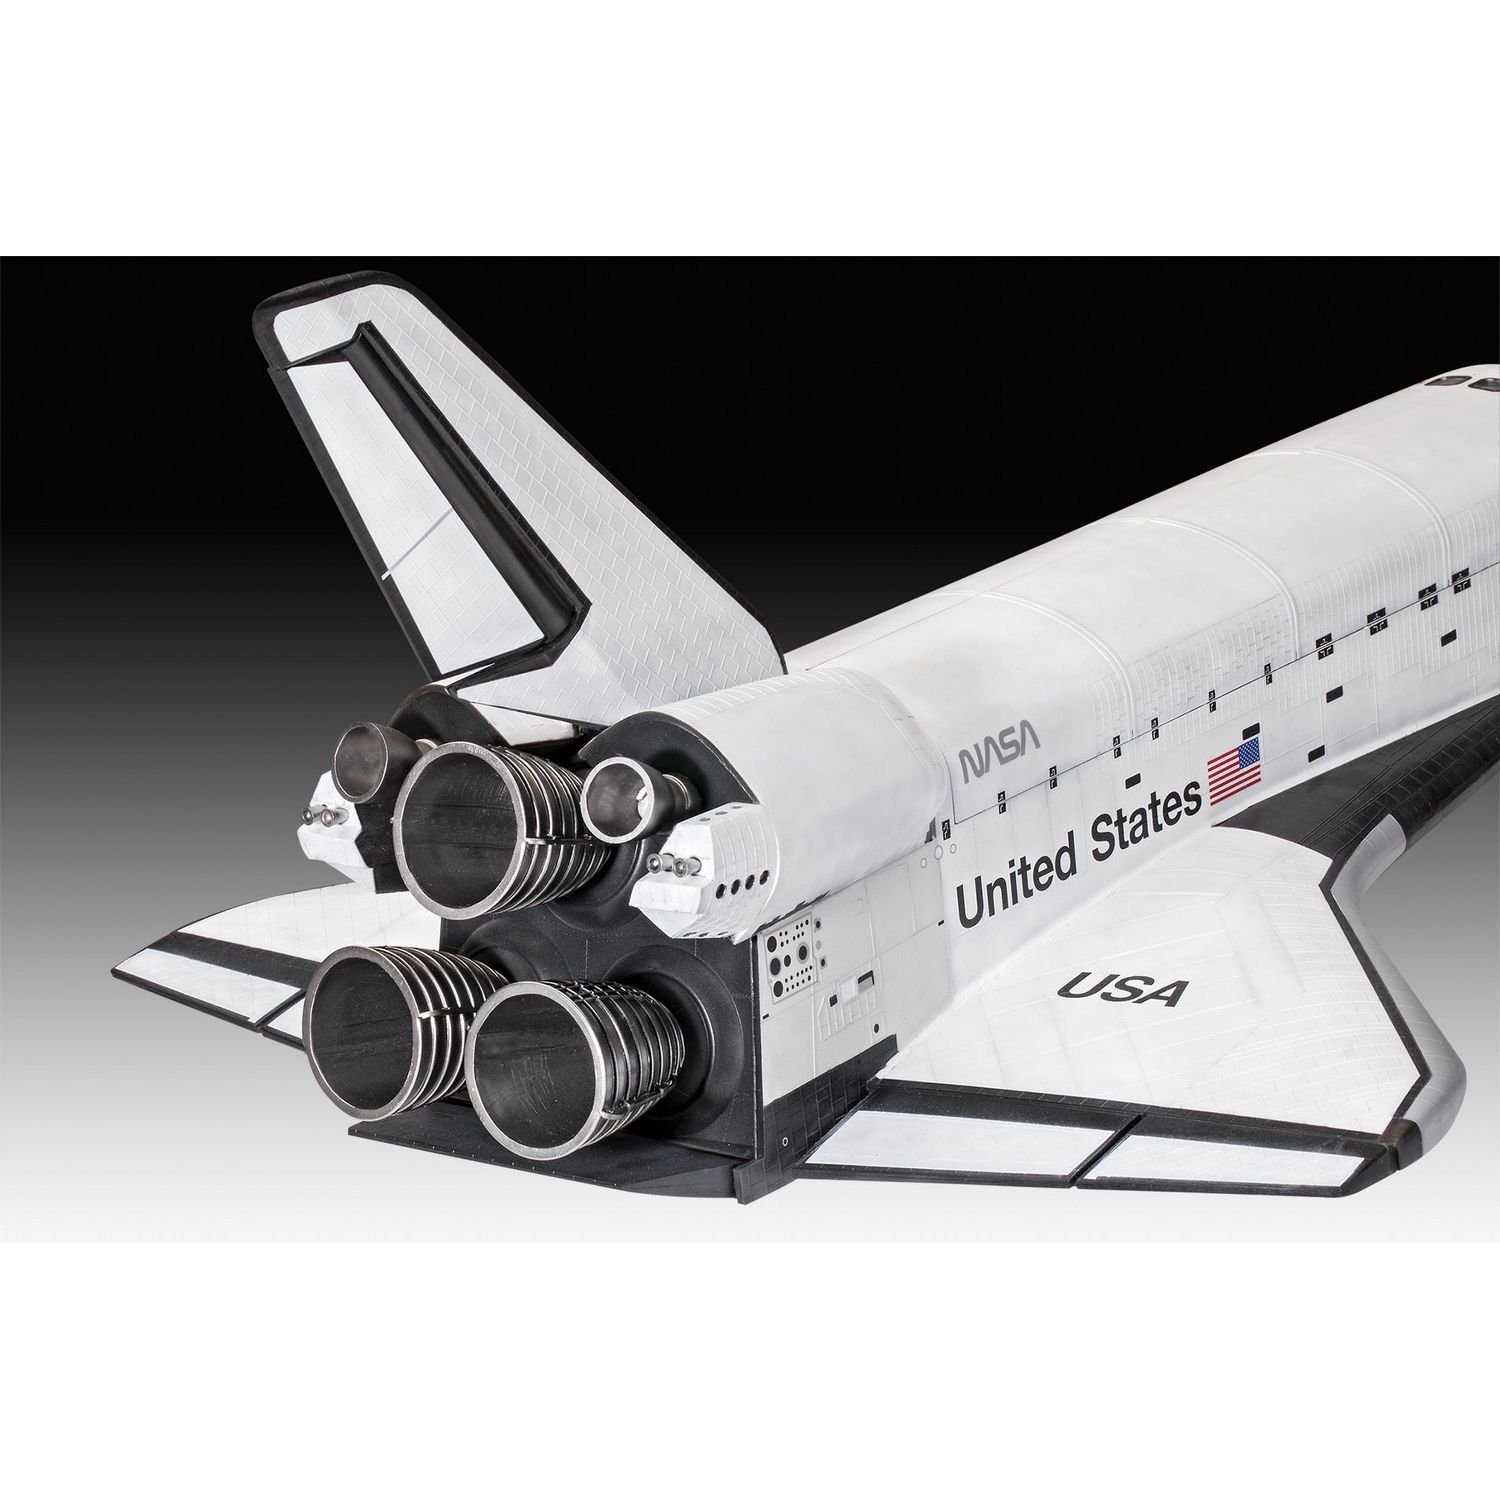 Збірна модель Revell Набір Space Shuttle, рівень 5, масштаб 1:72, 111 деталей (RVL-05673) - фото 7